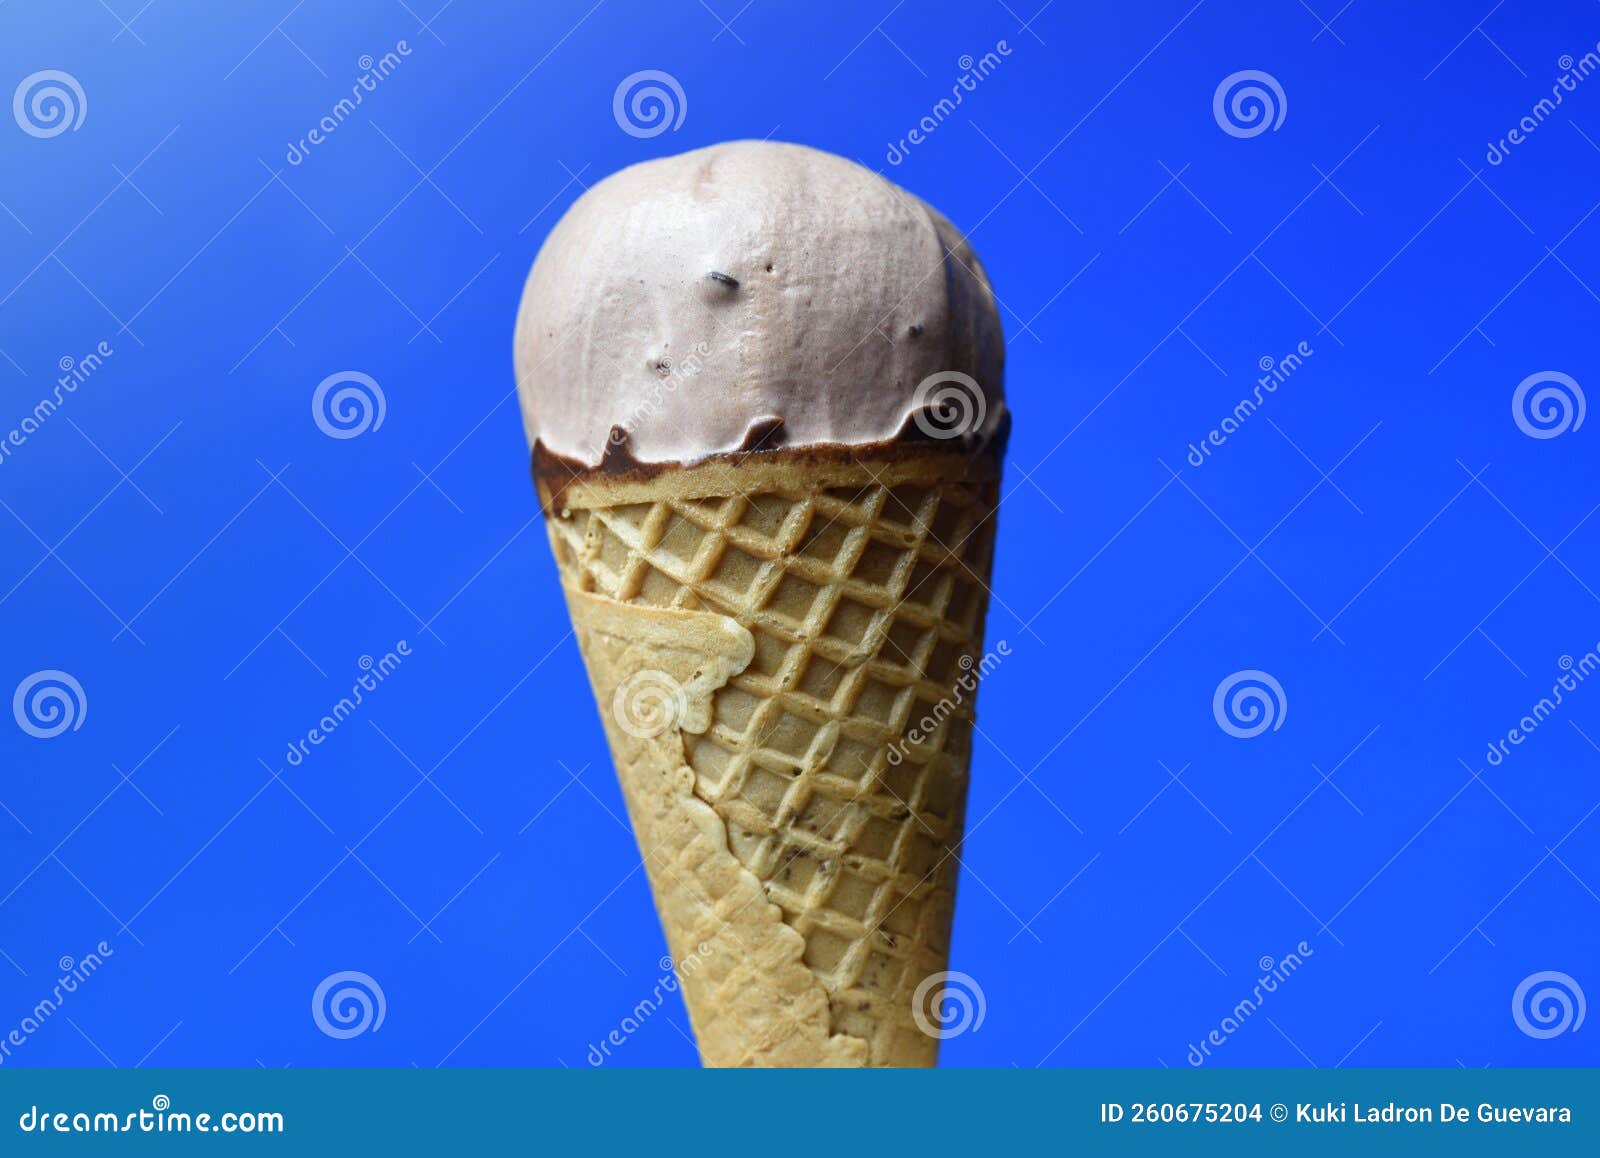 chocolate ice cream cone on blue background